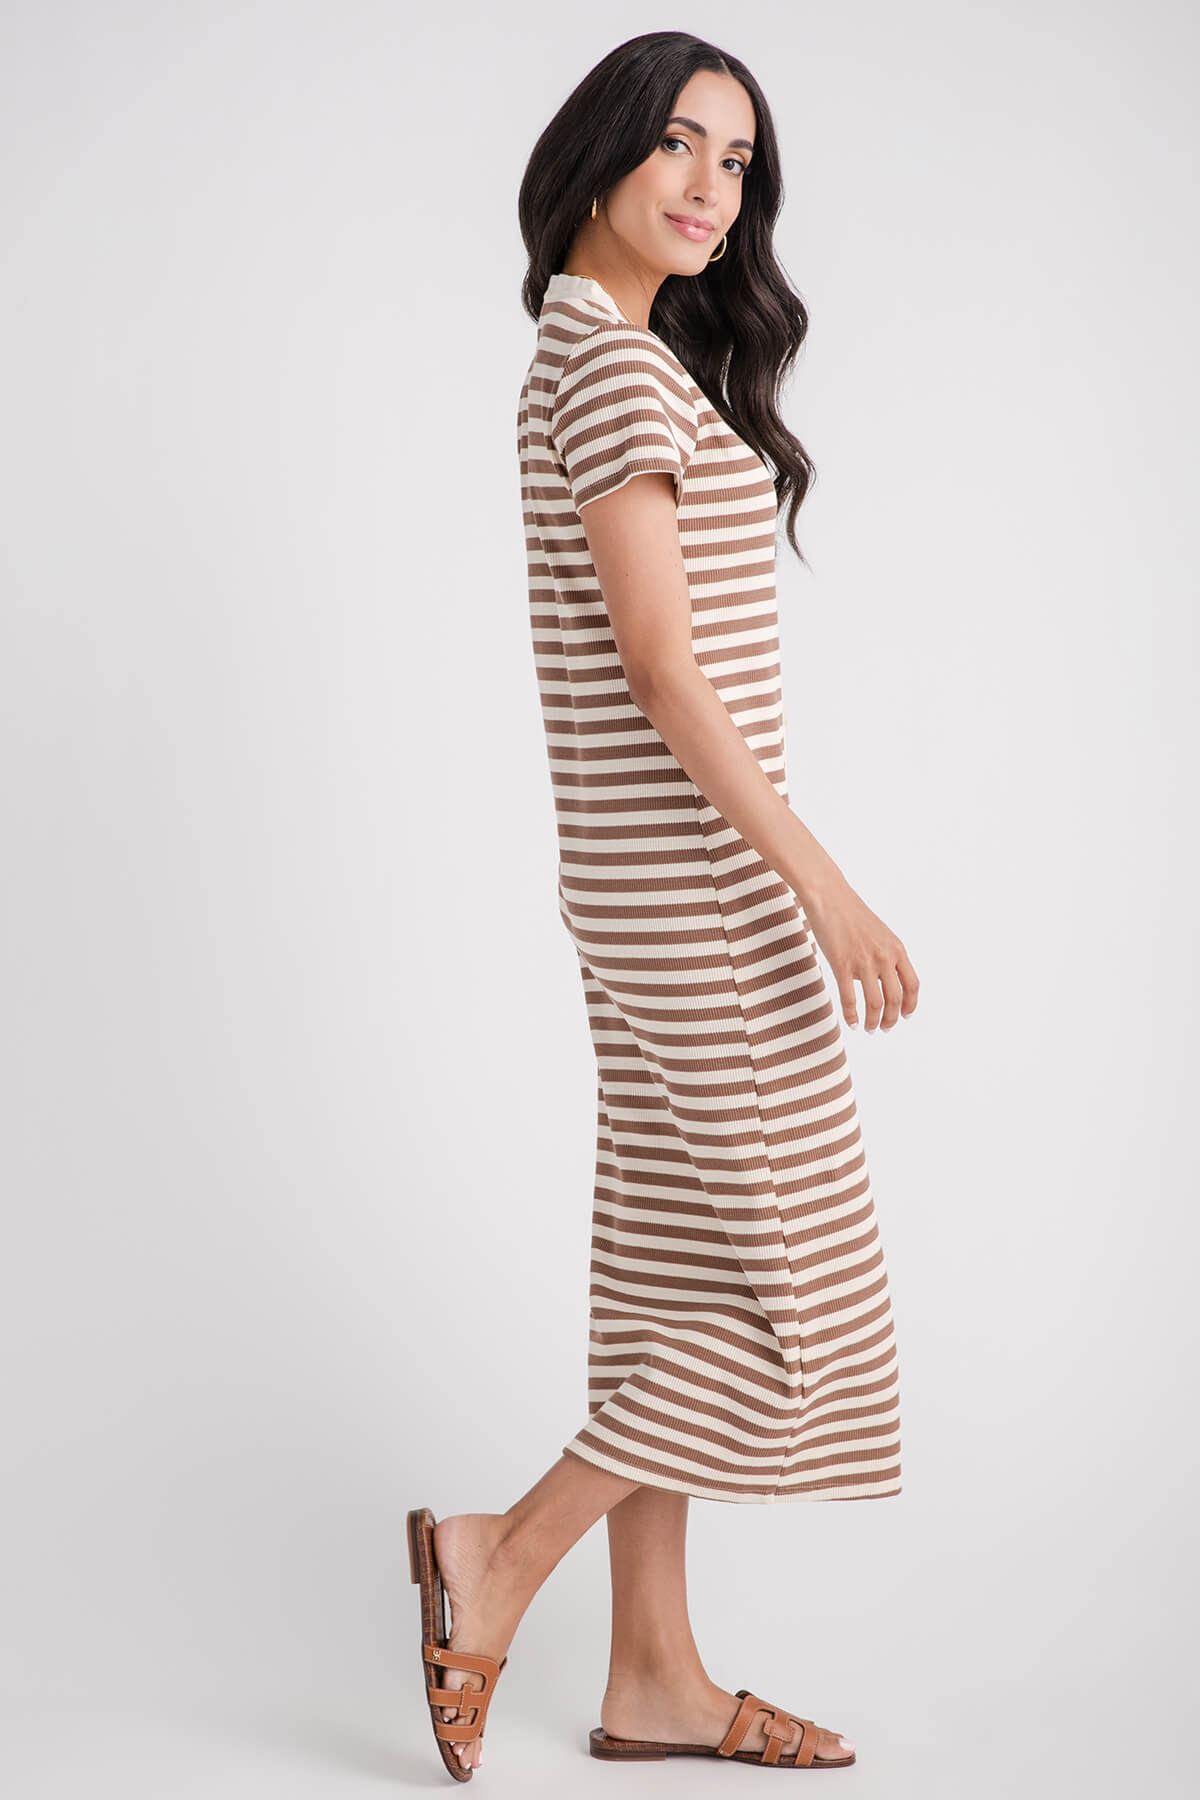 Wishlist Striped Knit Button Front Dress